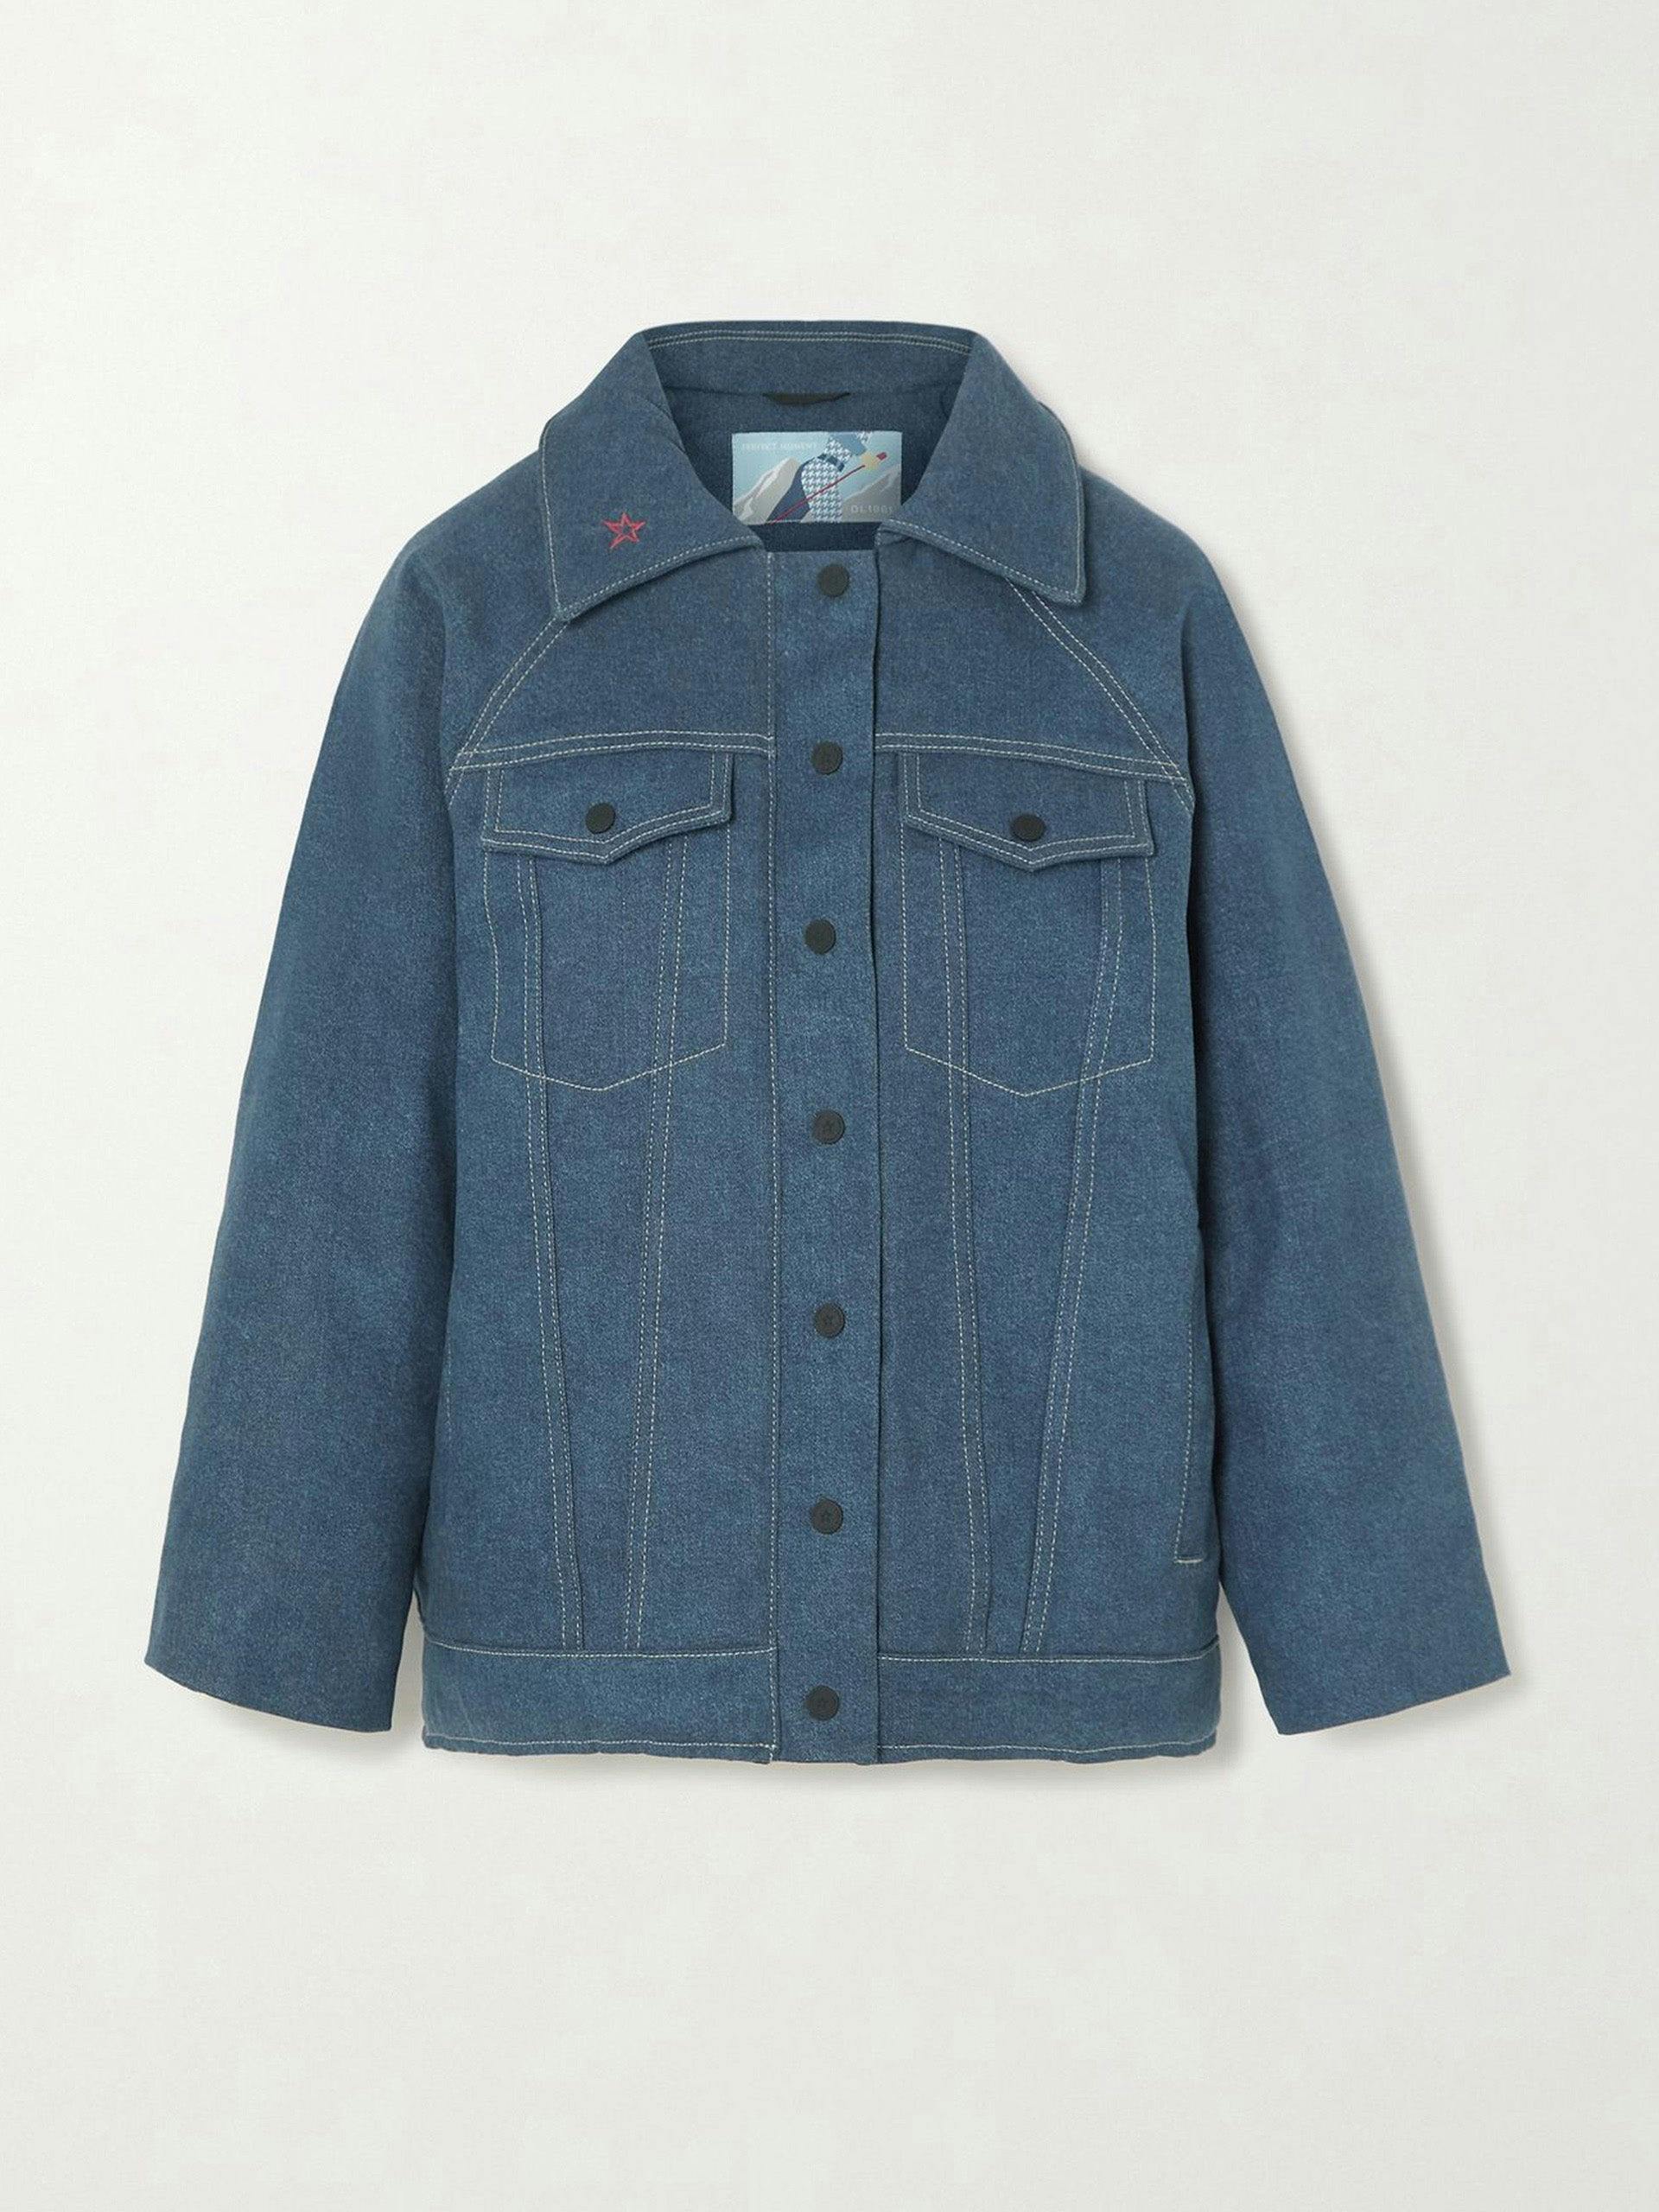 Corentine embroidered padded denim jacket